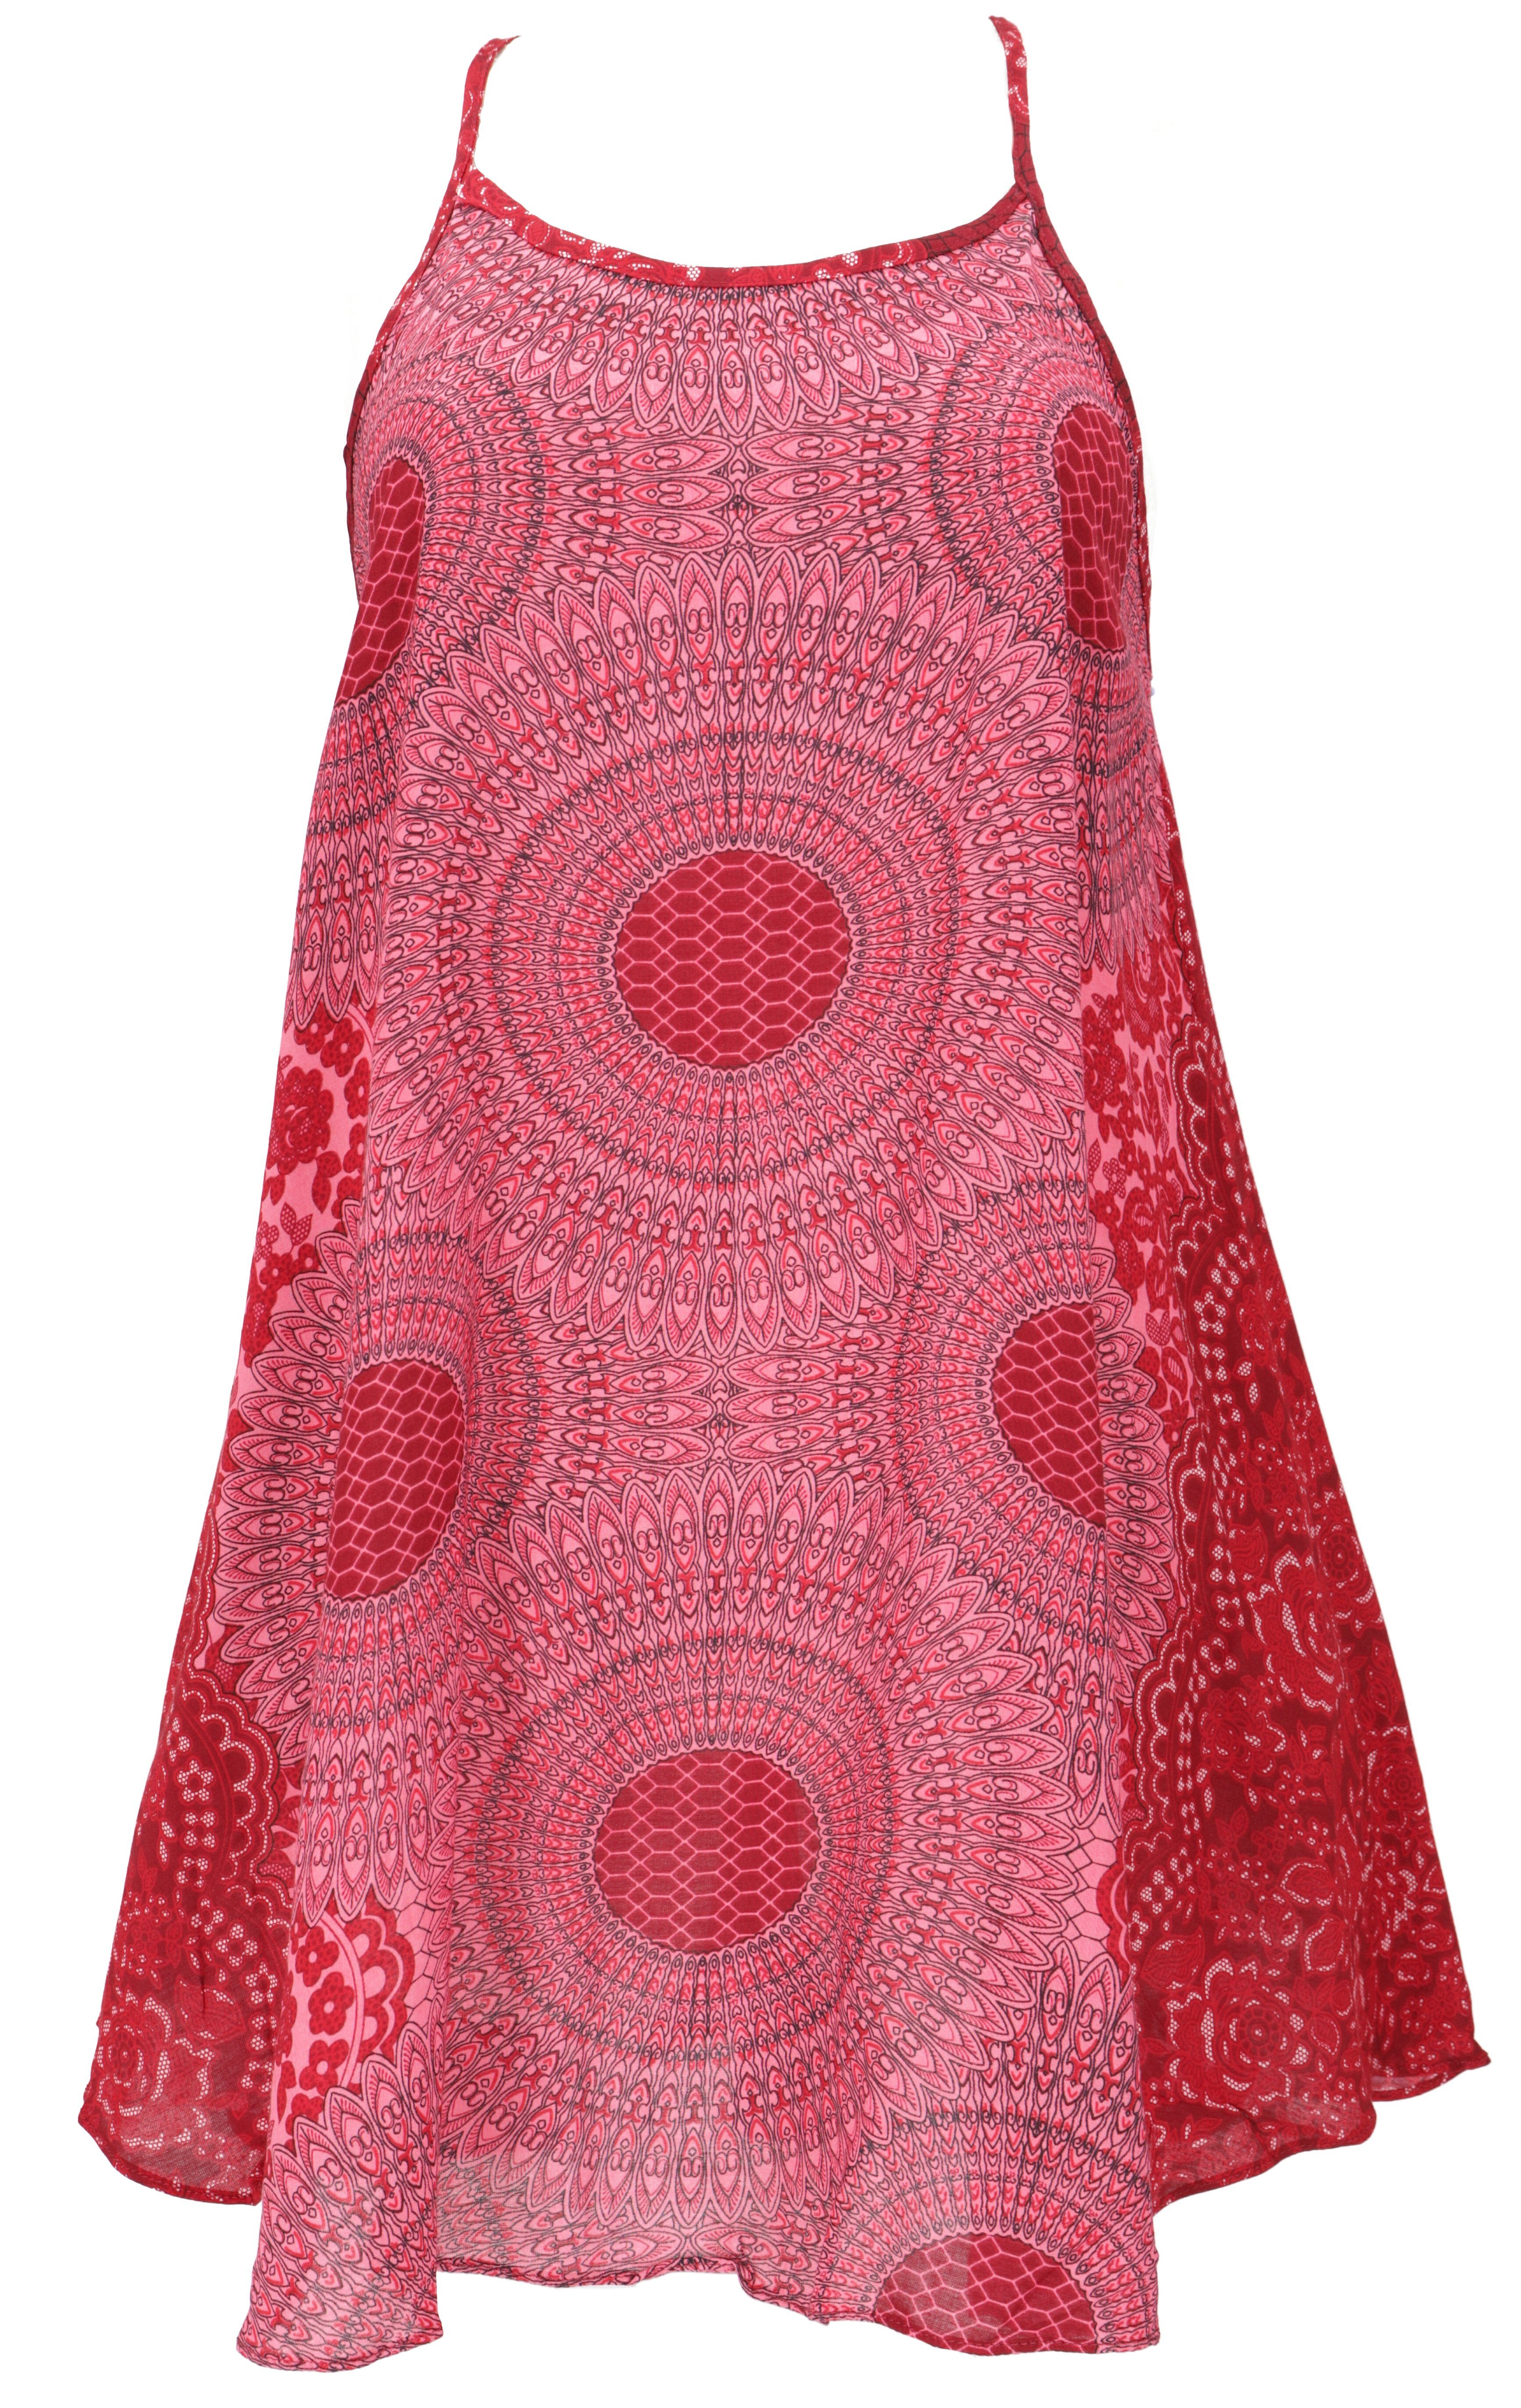 Guru-Shop Midikleid Boho Mandala Minikleid, Trägerkleid,.. alternative Bekleidung rot